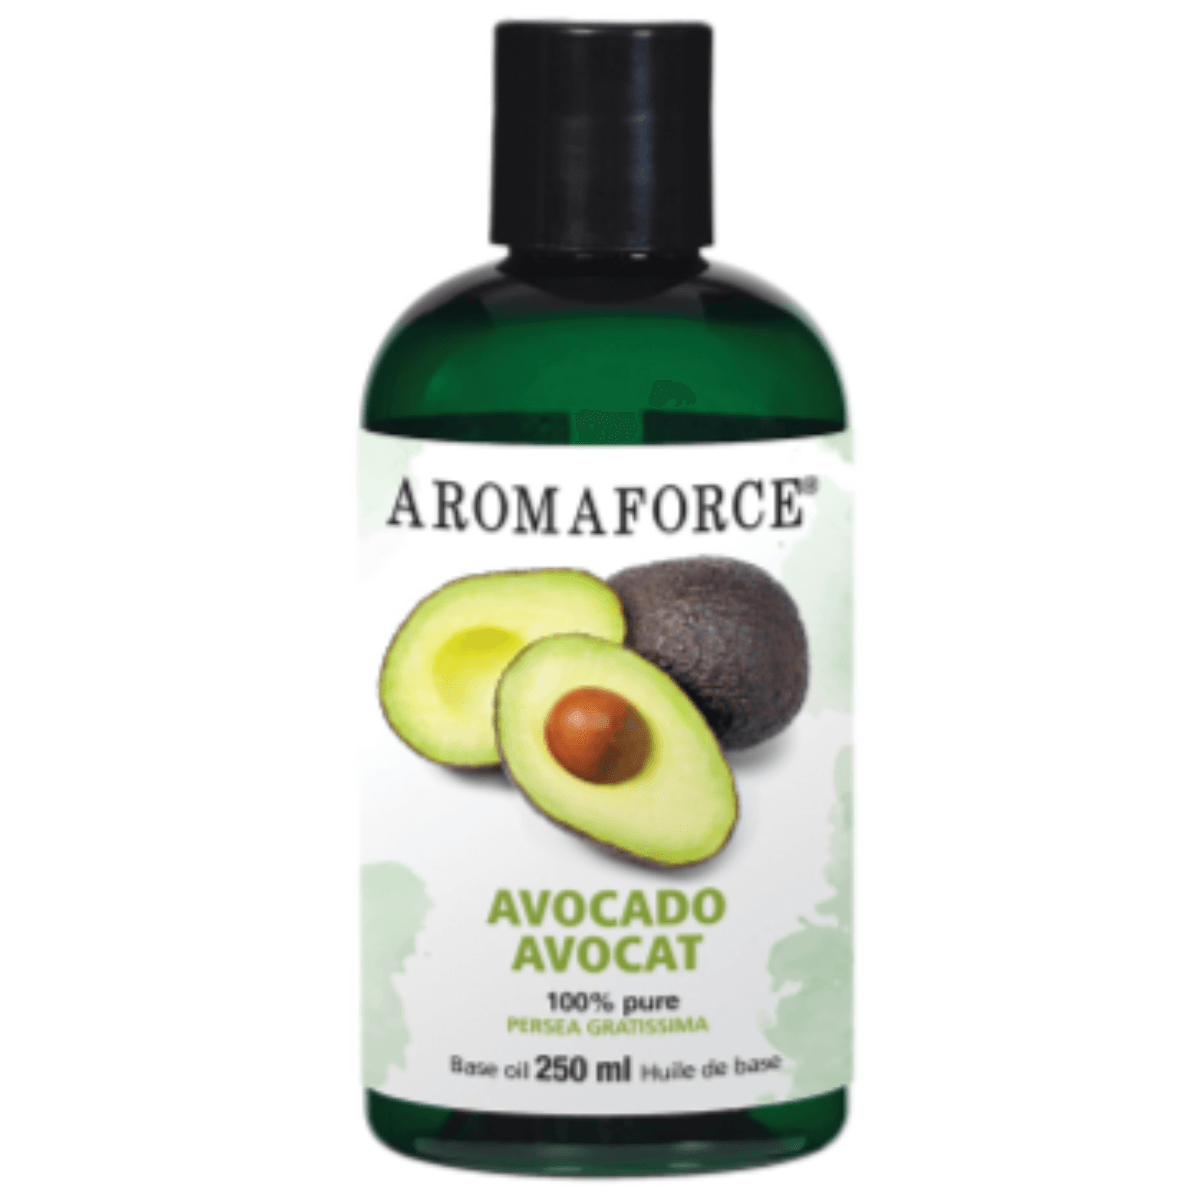 Aromaforce Base Oil Avocado 250mL Beauty Oils at Village Vitamin Store